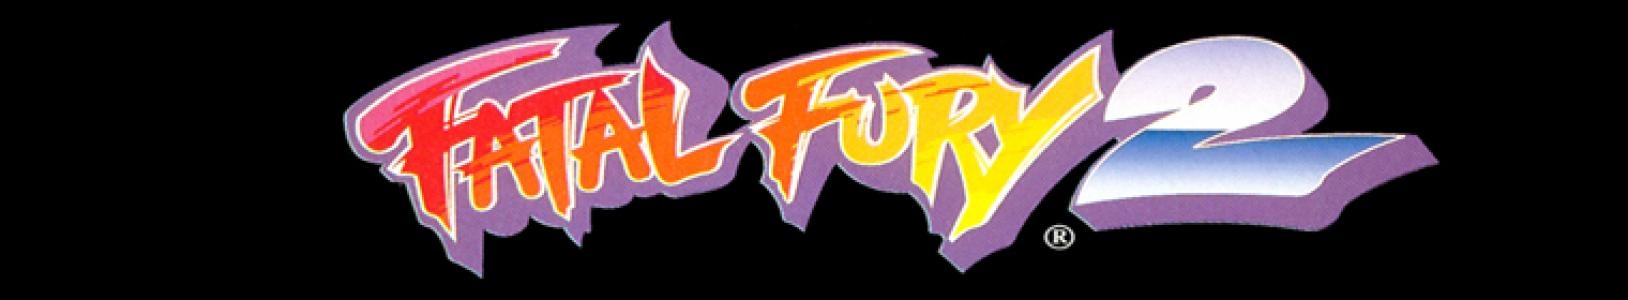 Fatal Fury 2 banner